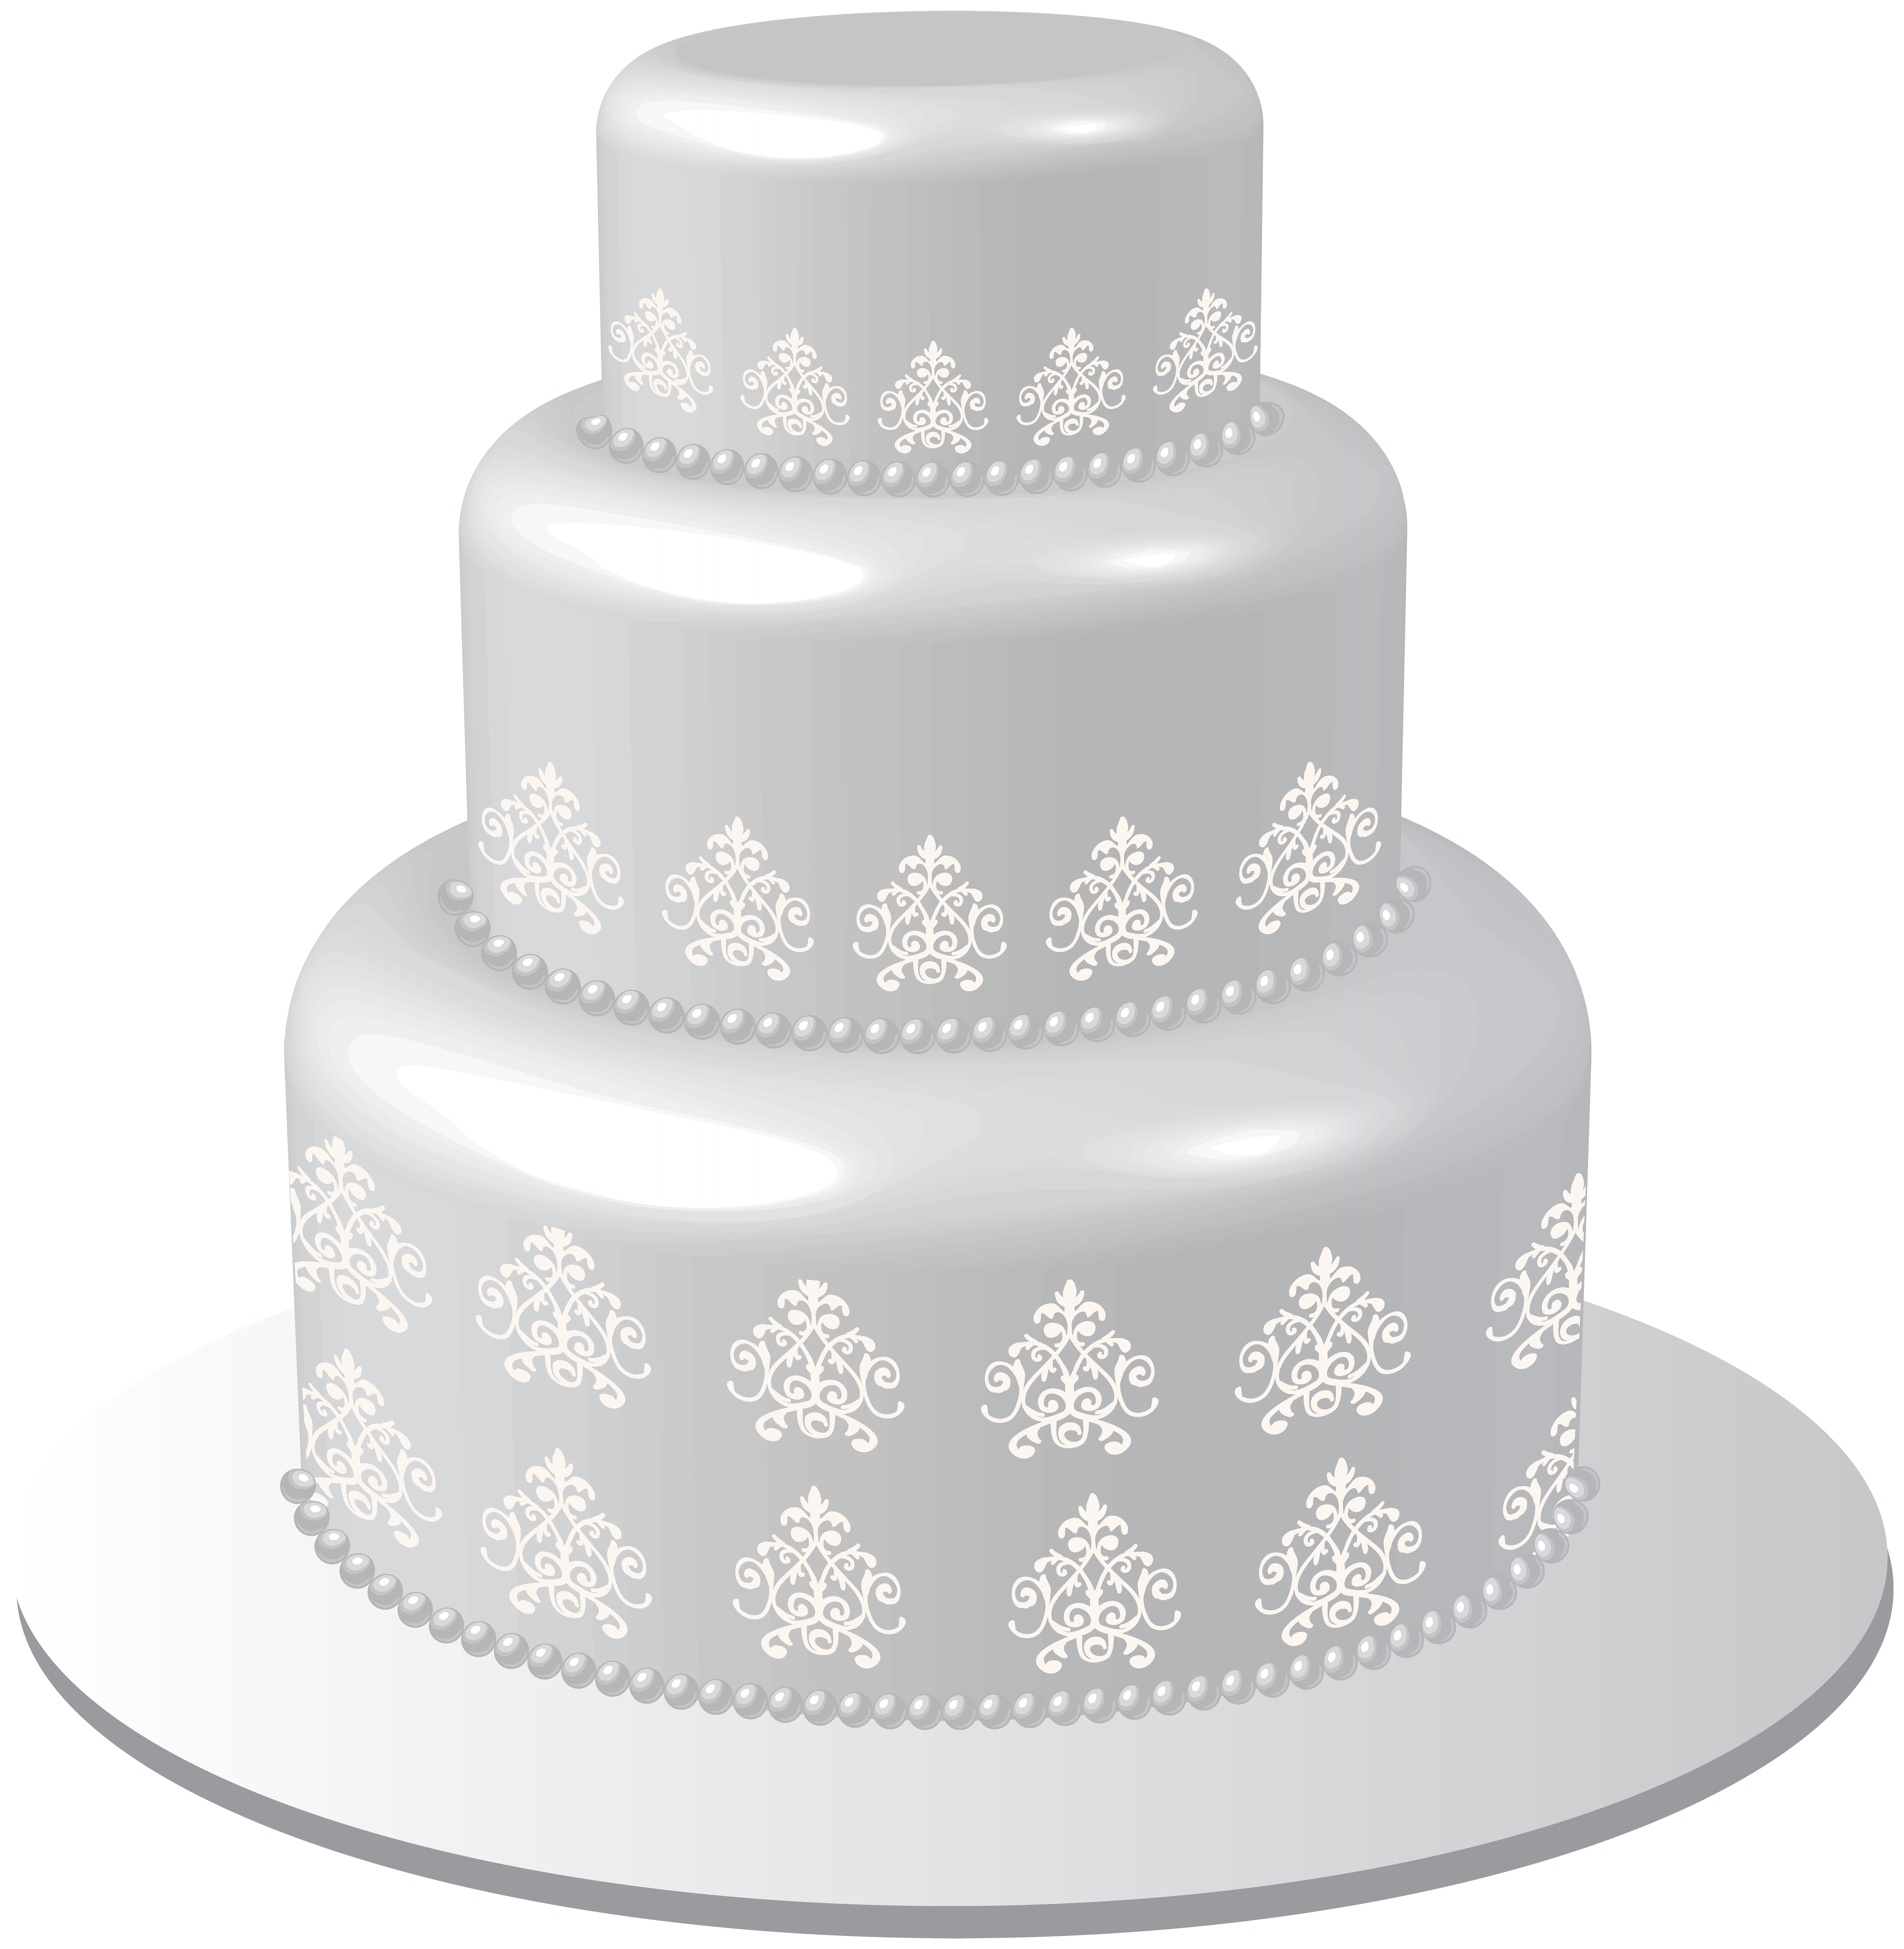 Copy of Gallery — Cakey Lulu's Luxury Wedding Cakes